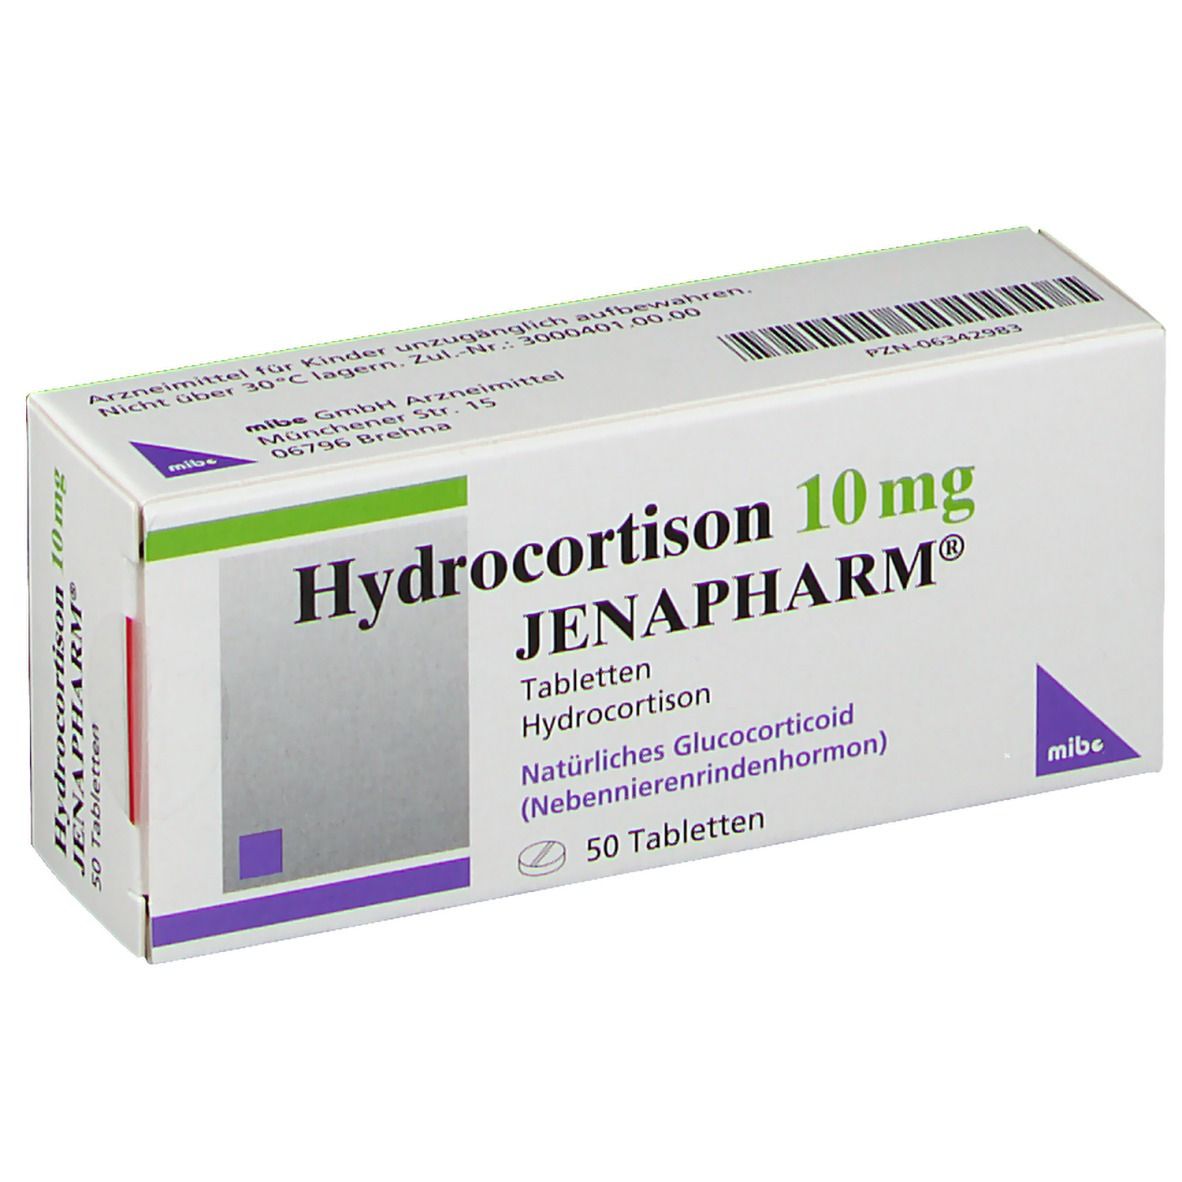 Hydrocortison 10 mg Jenapharm